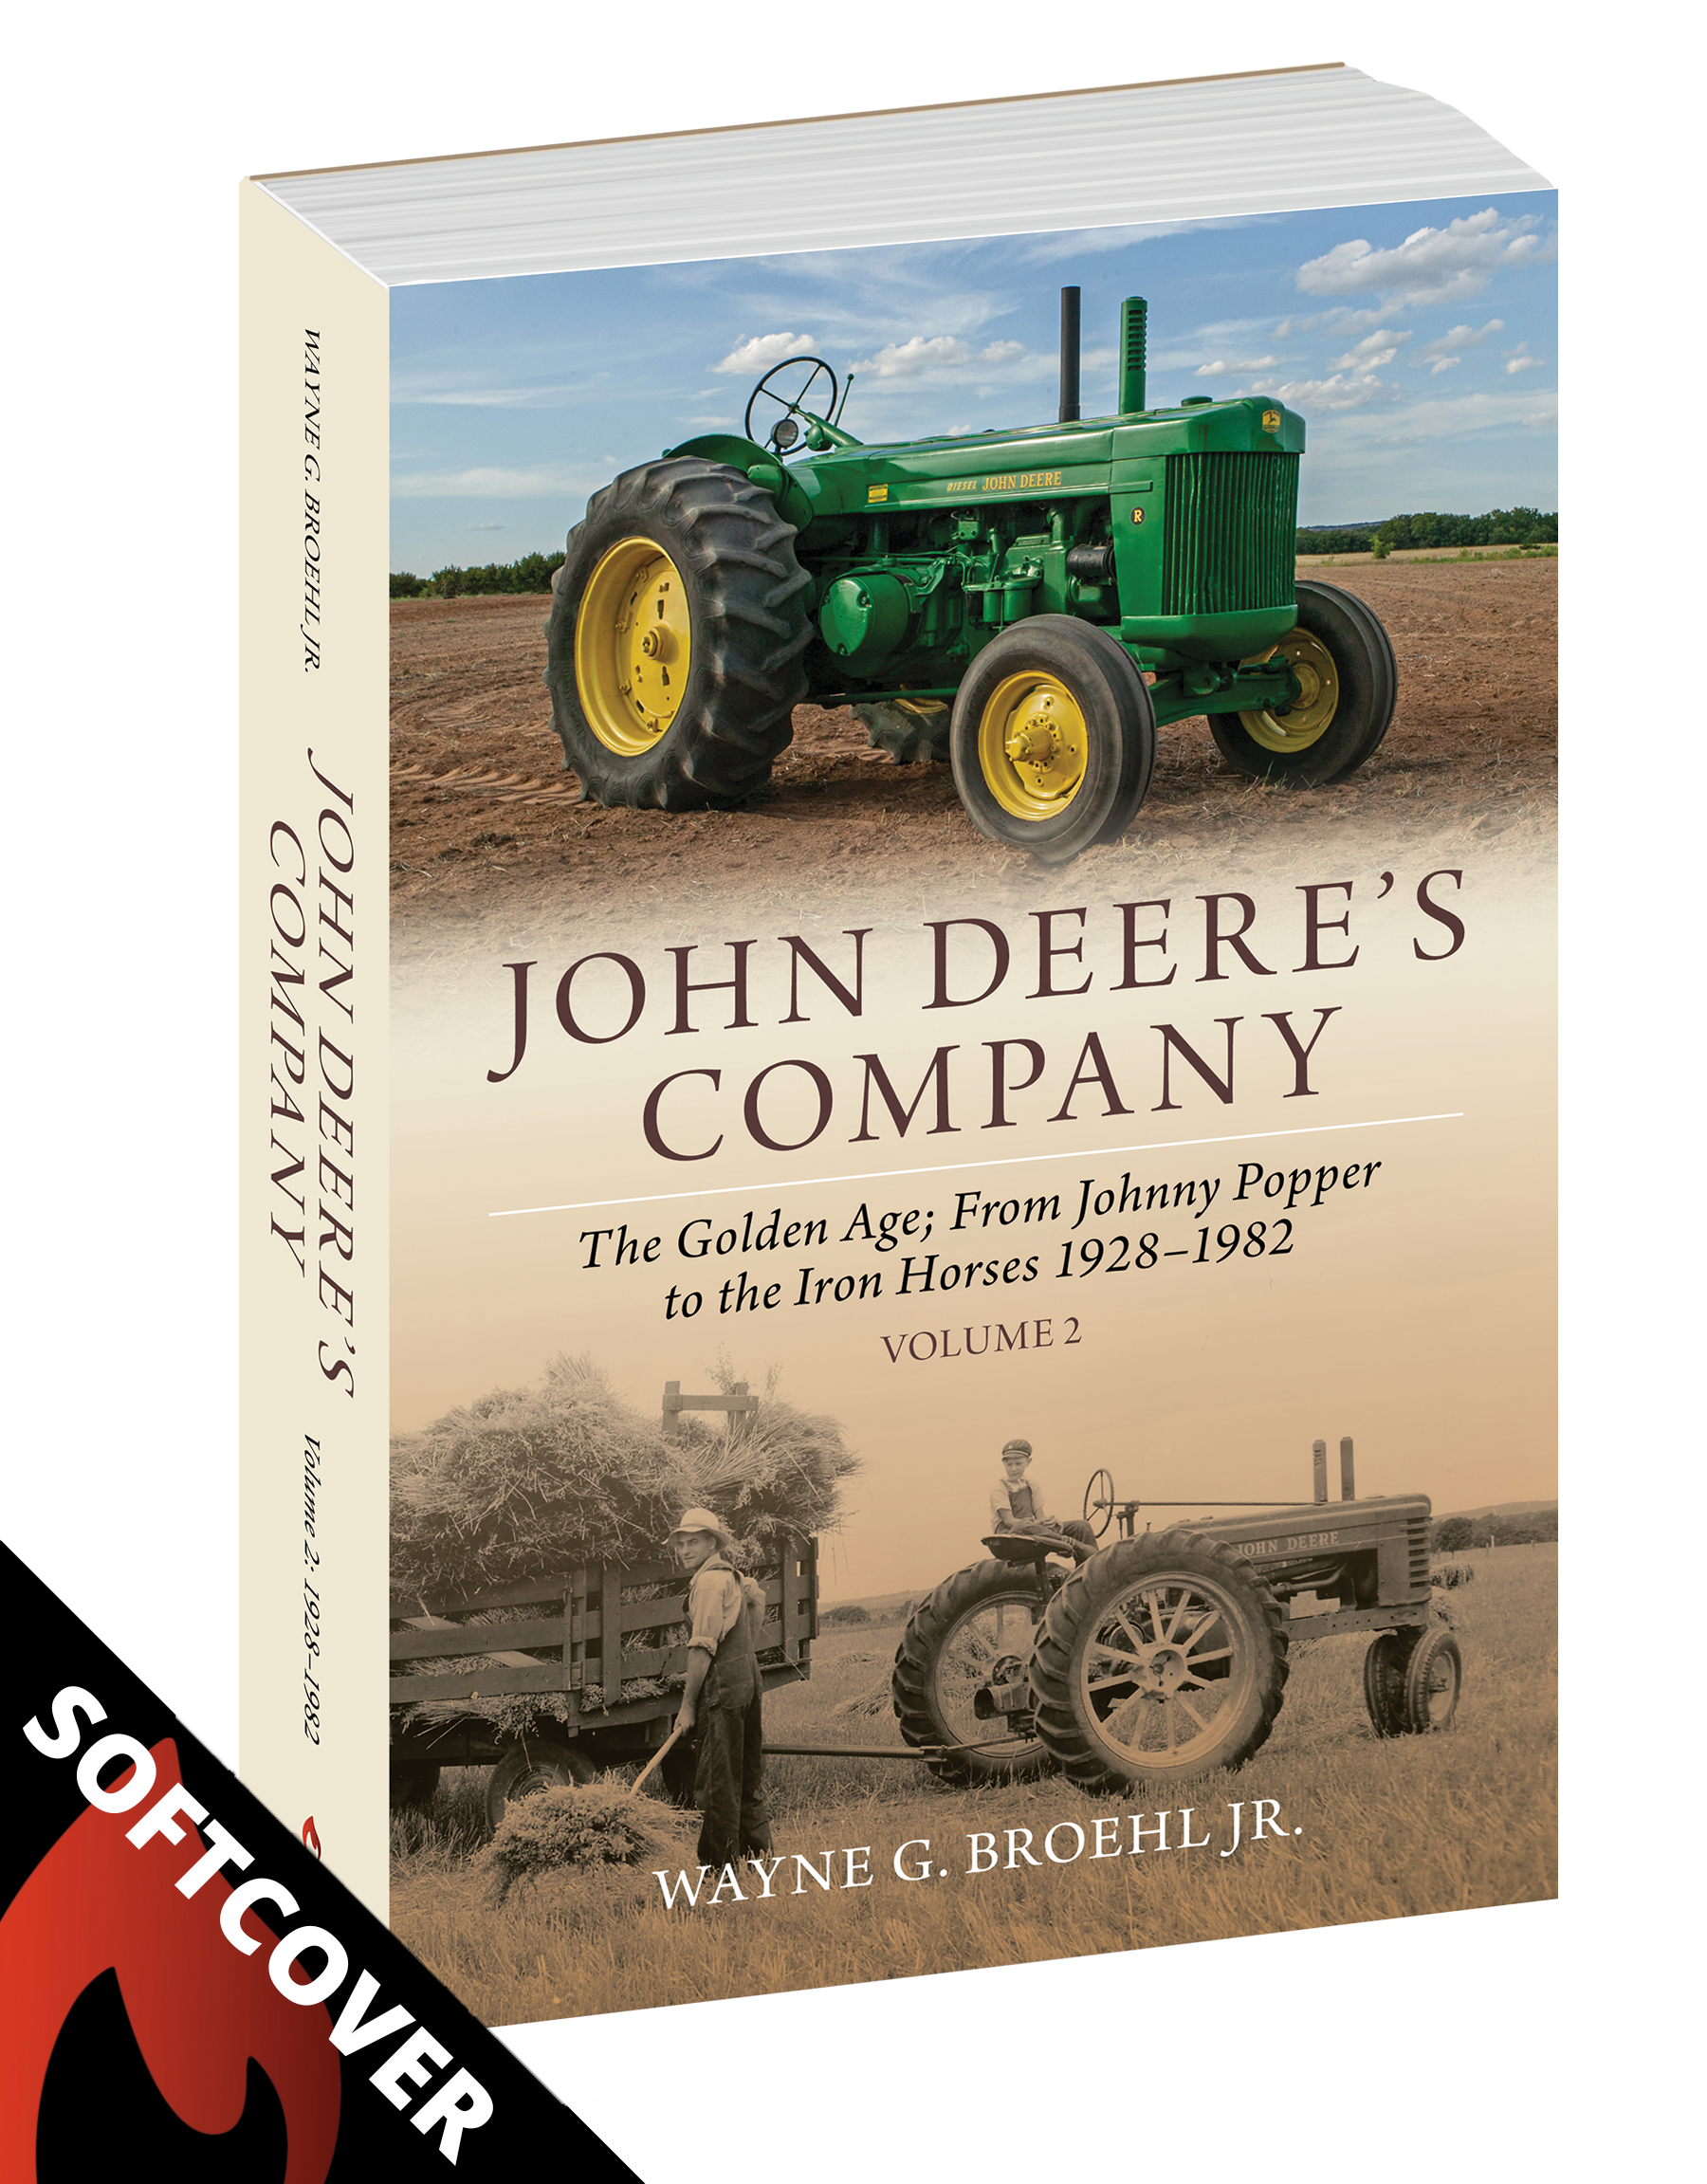 John Deere's Company - Volume 2 Cover File